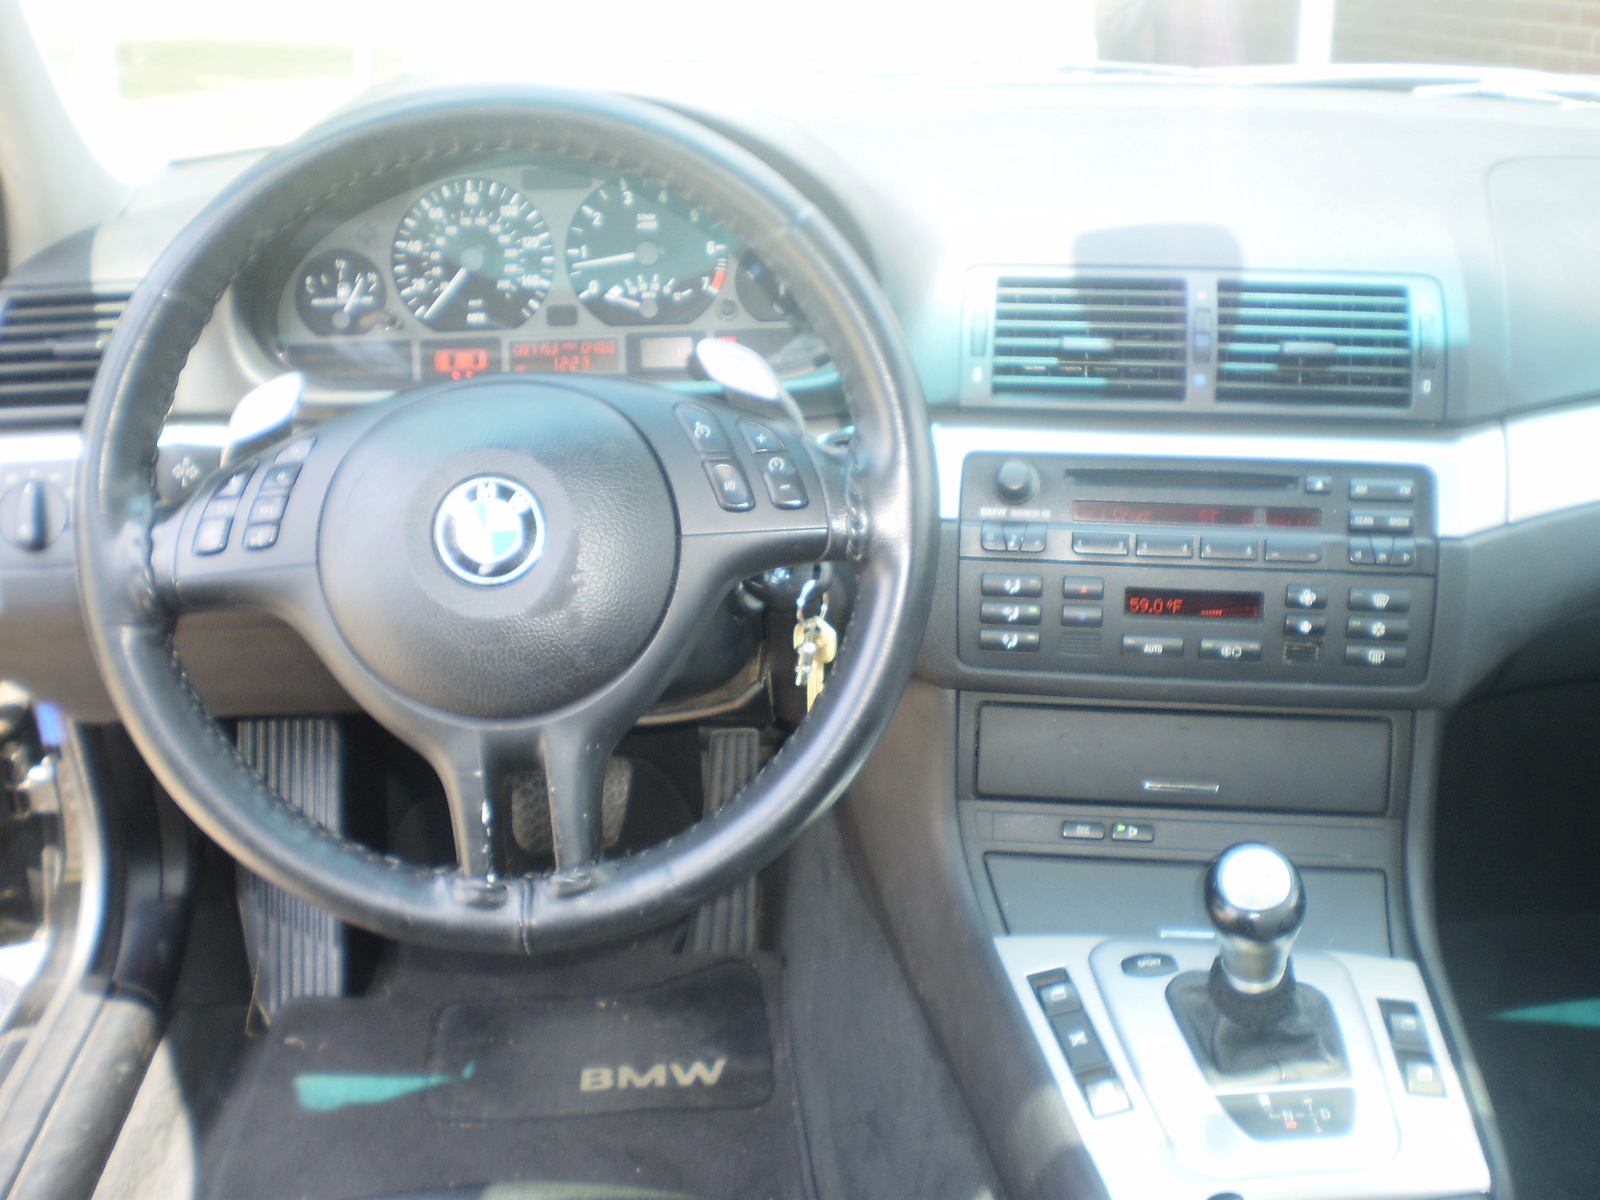 2004 Bmw 325ci interior #5